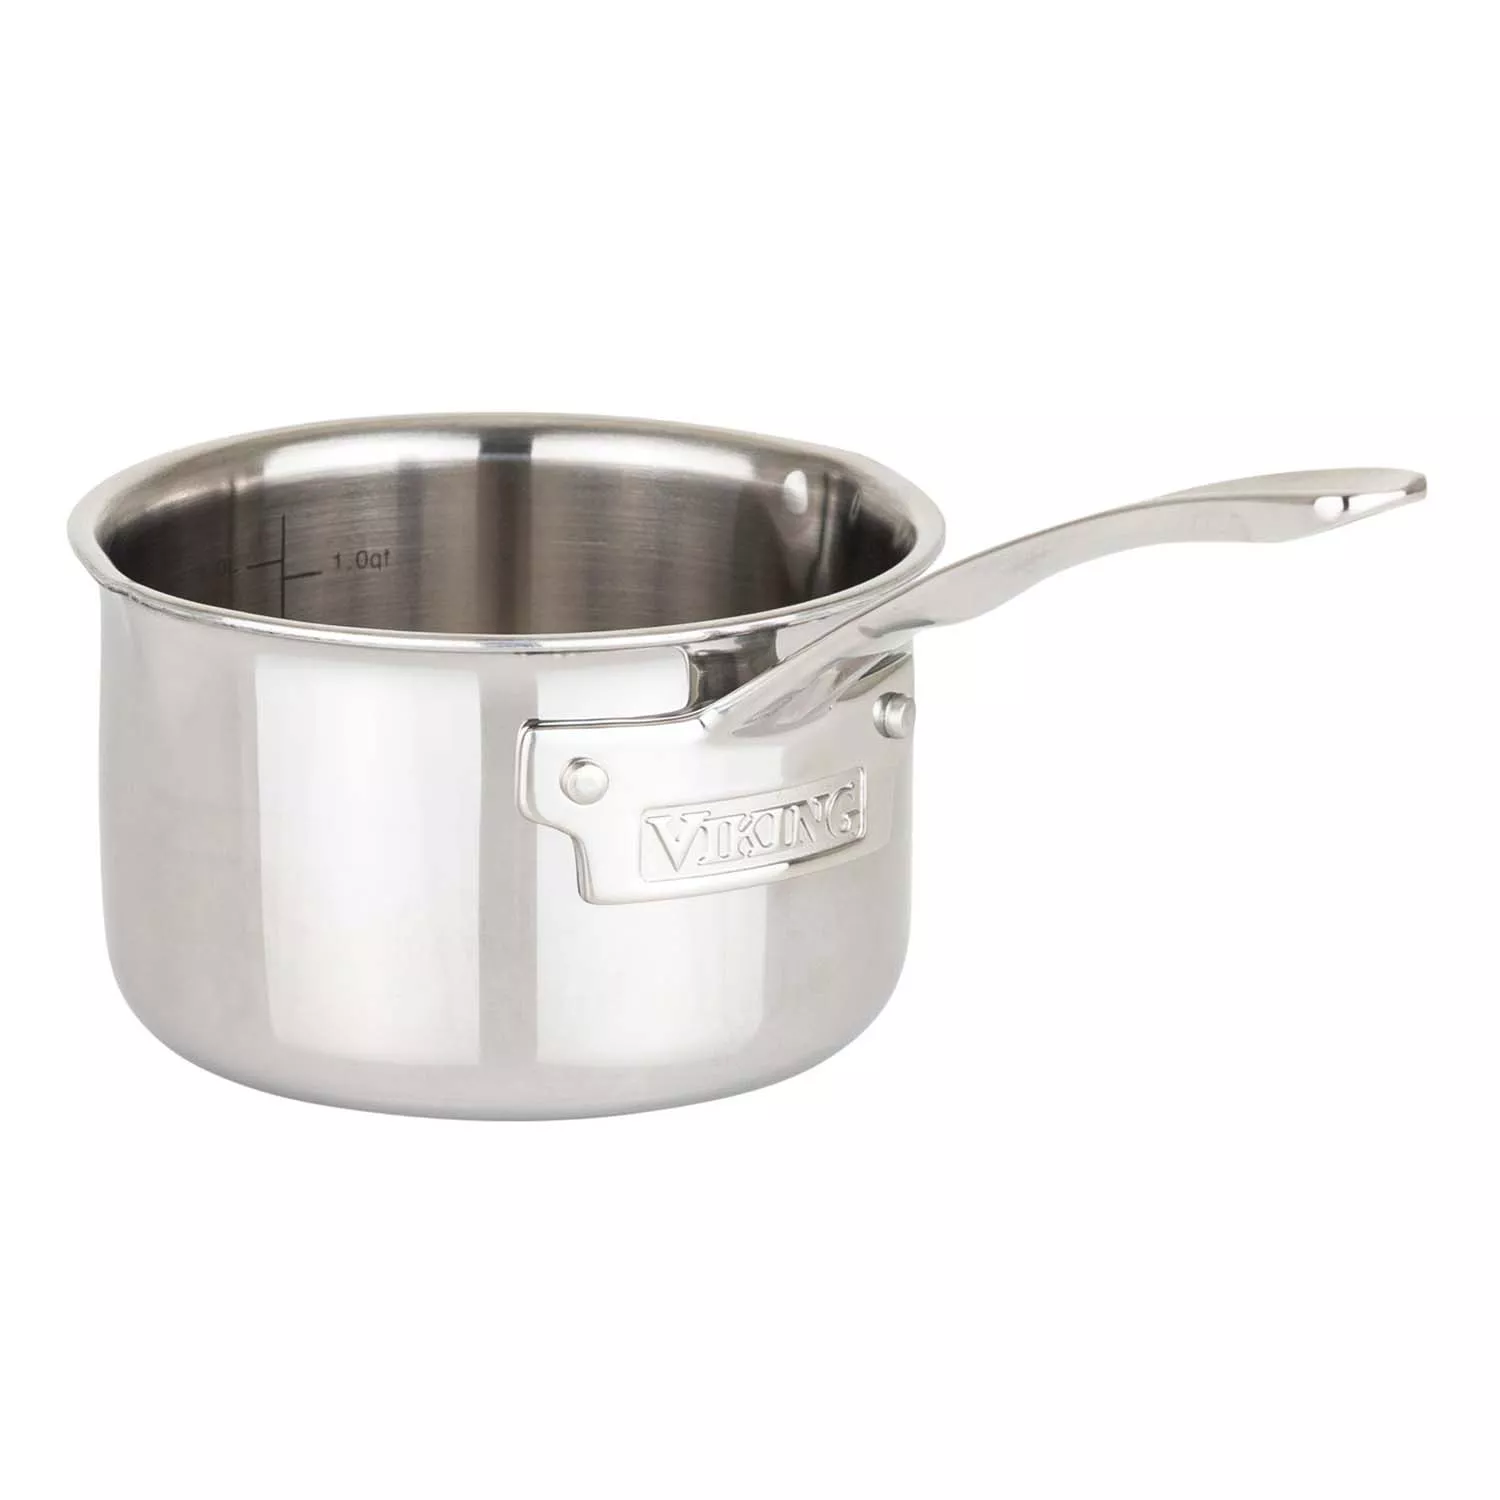  Viking 3-Ply Stainless Steel Sauce Pan, 3 Quart: Home & Kitchen